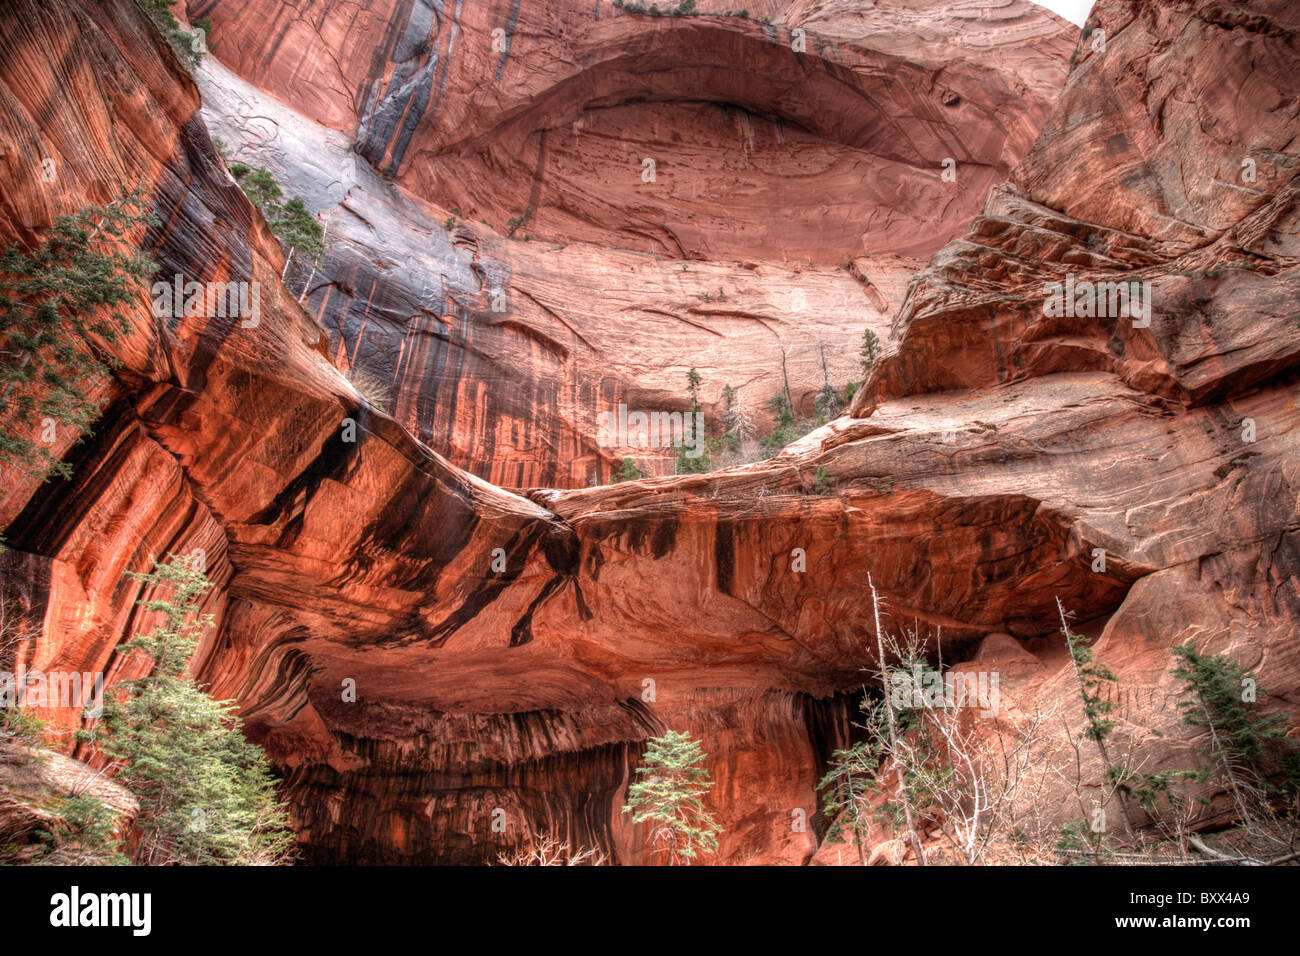 Double Arch Alkoven im Bereich Kolob Canyons der Zion Nationalpark, Utah, USA. Stockfoto